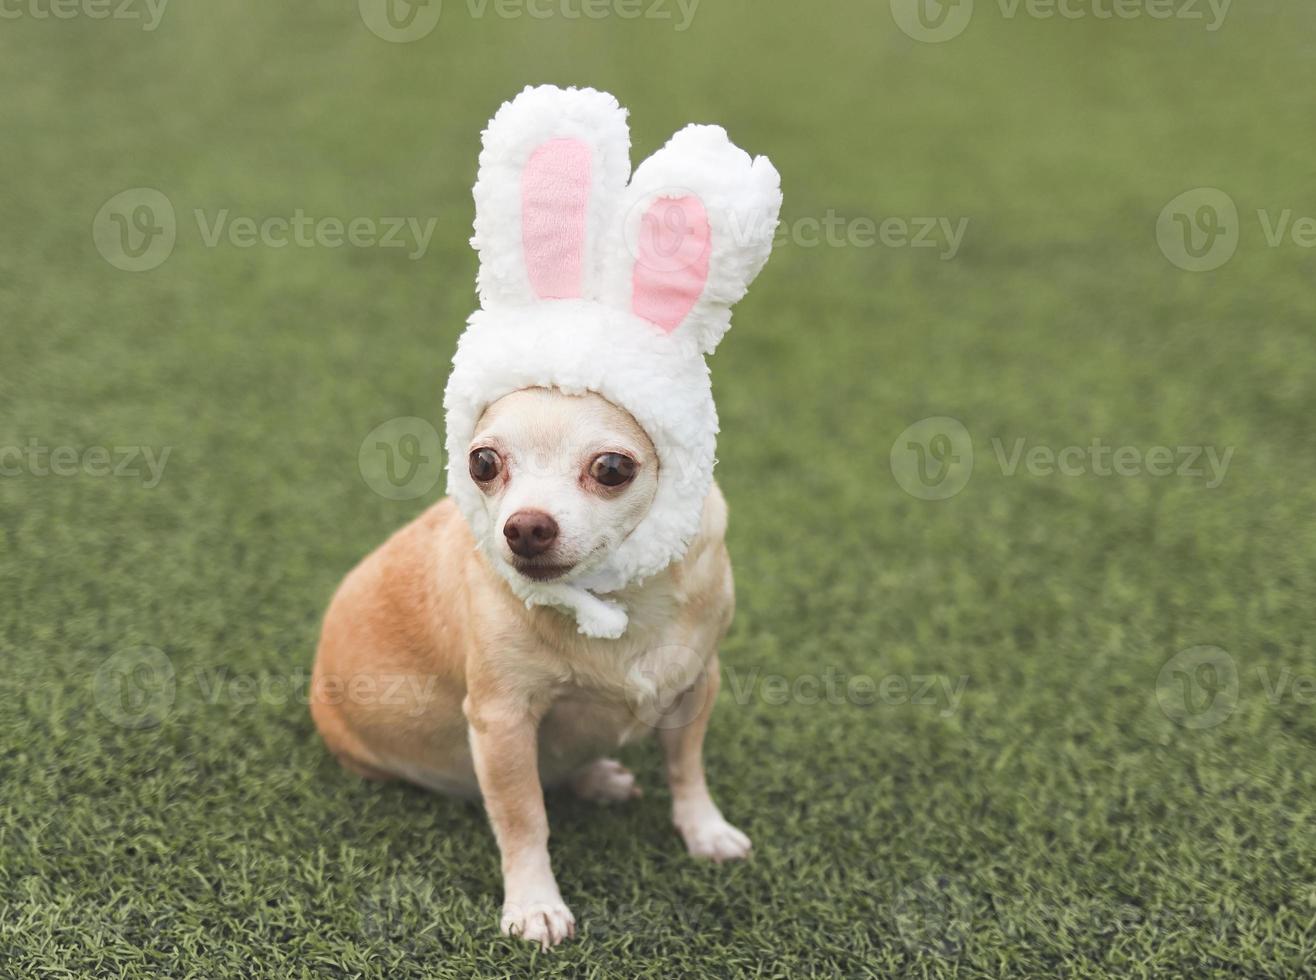 chihuahua hond gekleed omhoog met Pasen konijn kostuum hoofdband zittend Aan groen gras. foto